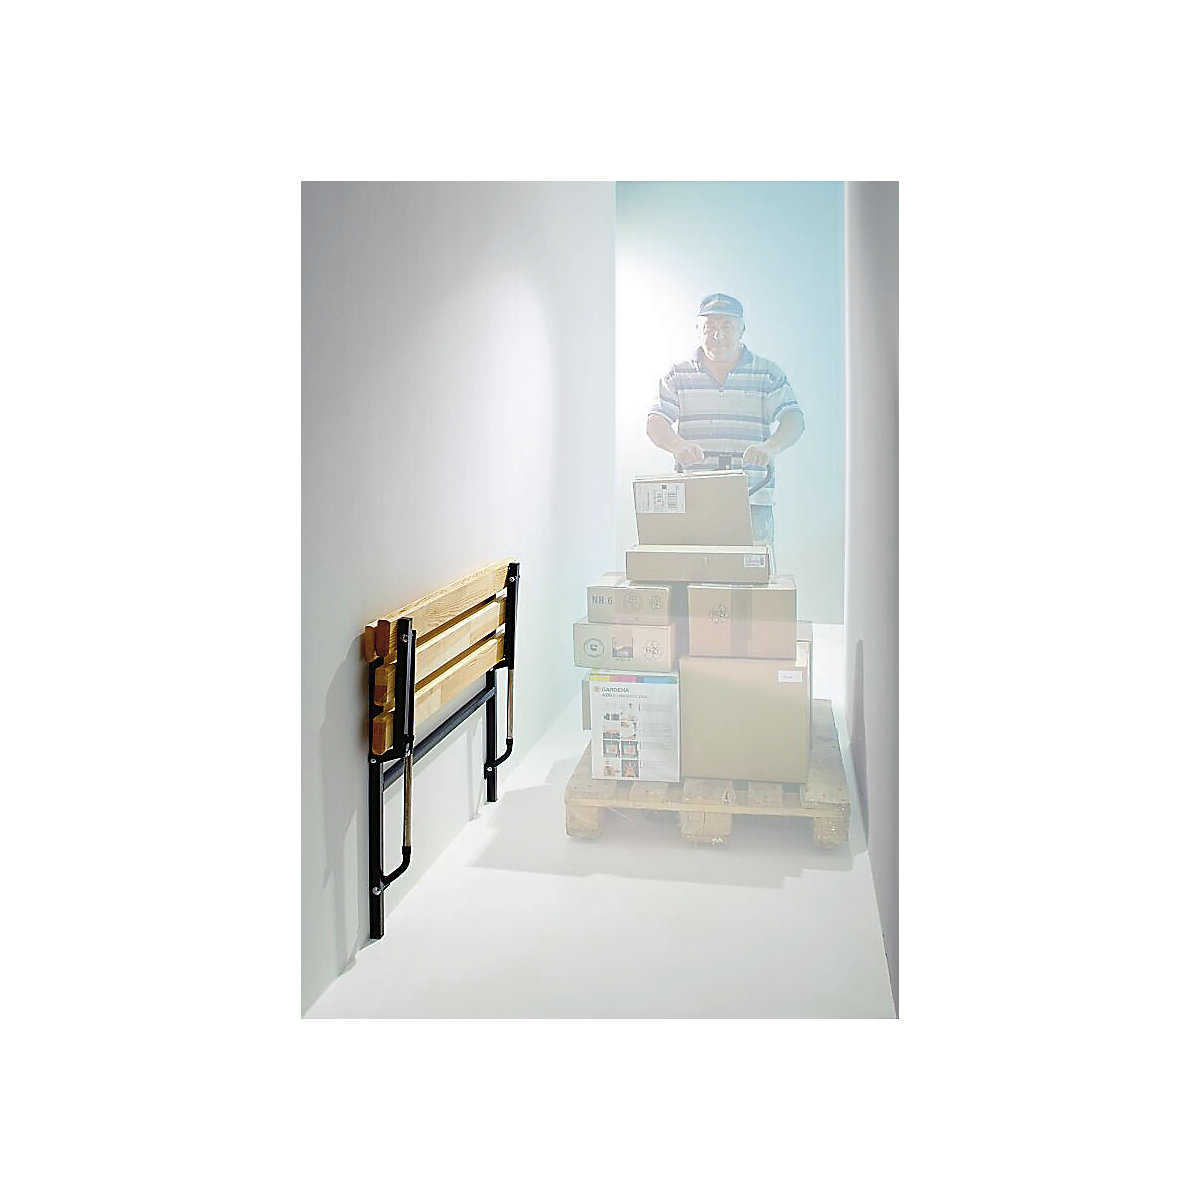 Sypro – Folding wall-mounted bench (Product illustration 4)